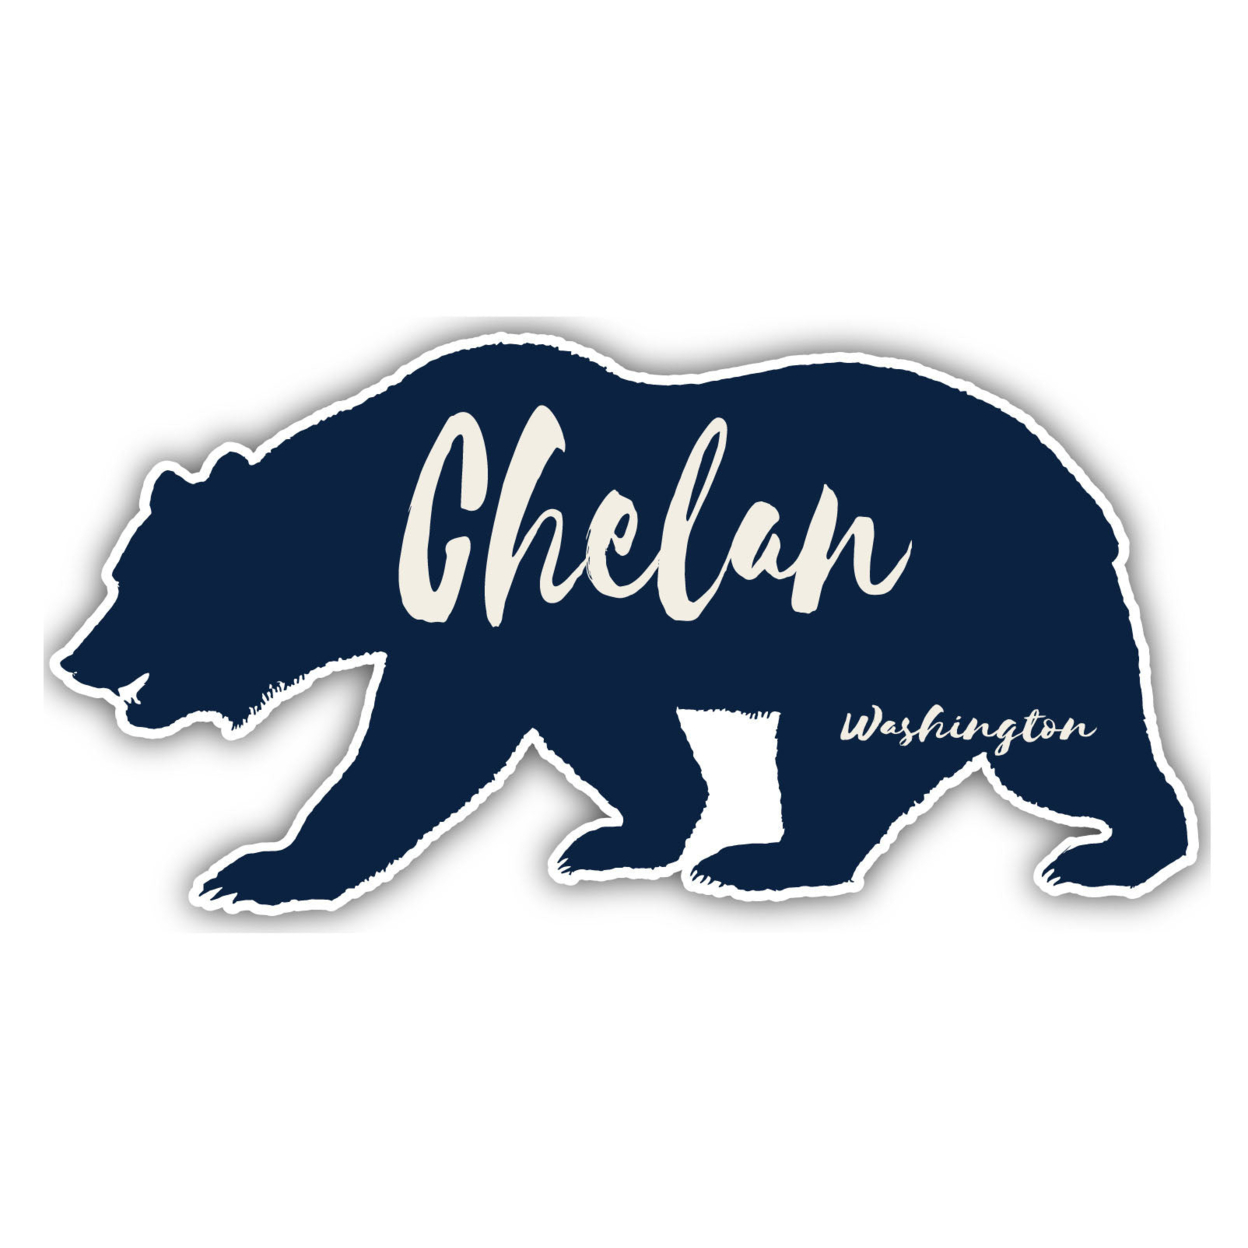 Chelan Washington Souvenir Decorative Stickers (Choose Theme And Size) - Single Unit, 2-Inch, Camp Life